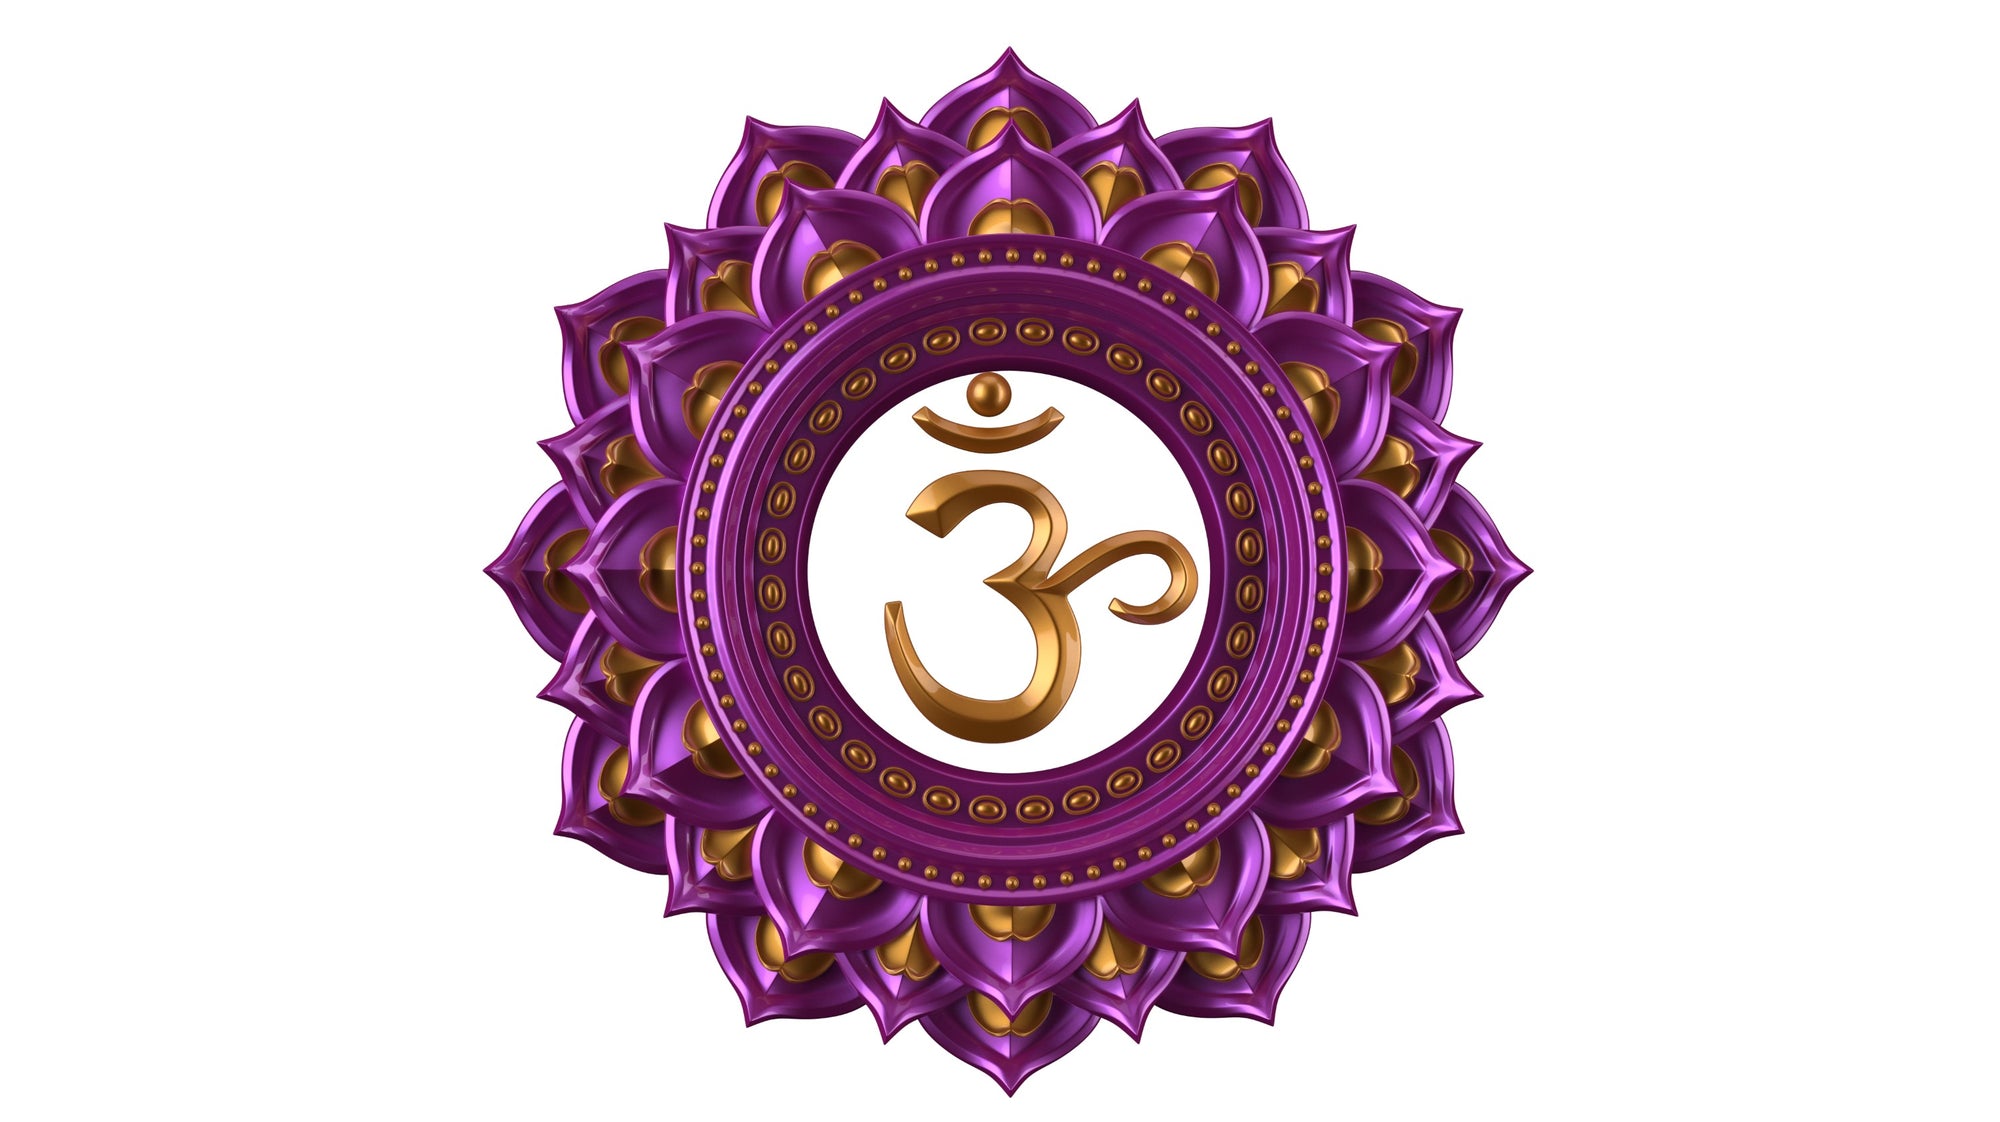 Image of the crown or sahasrara chakra symbol